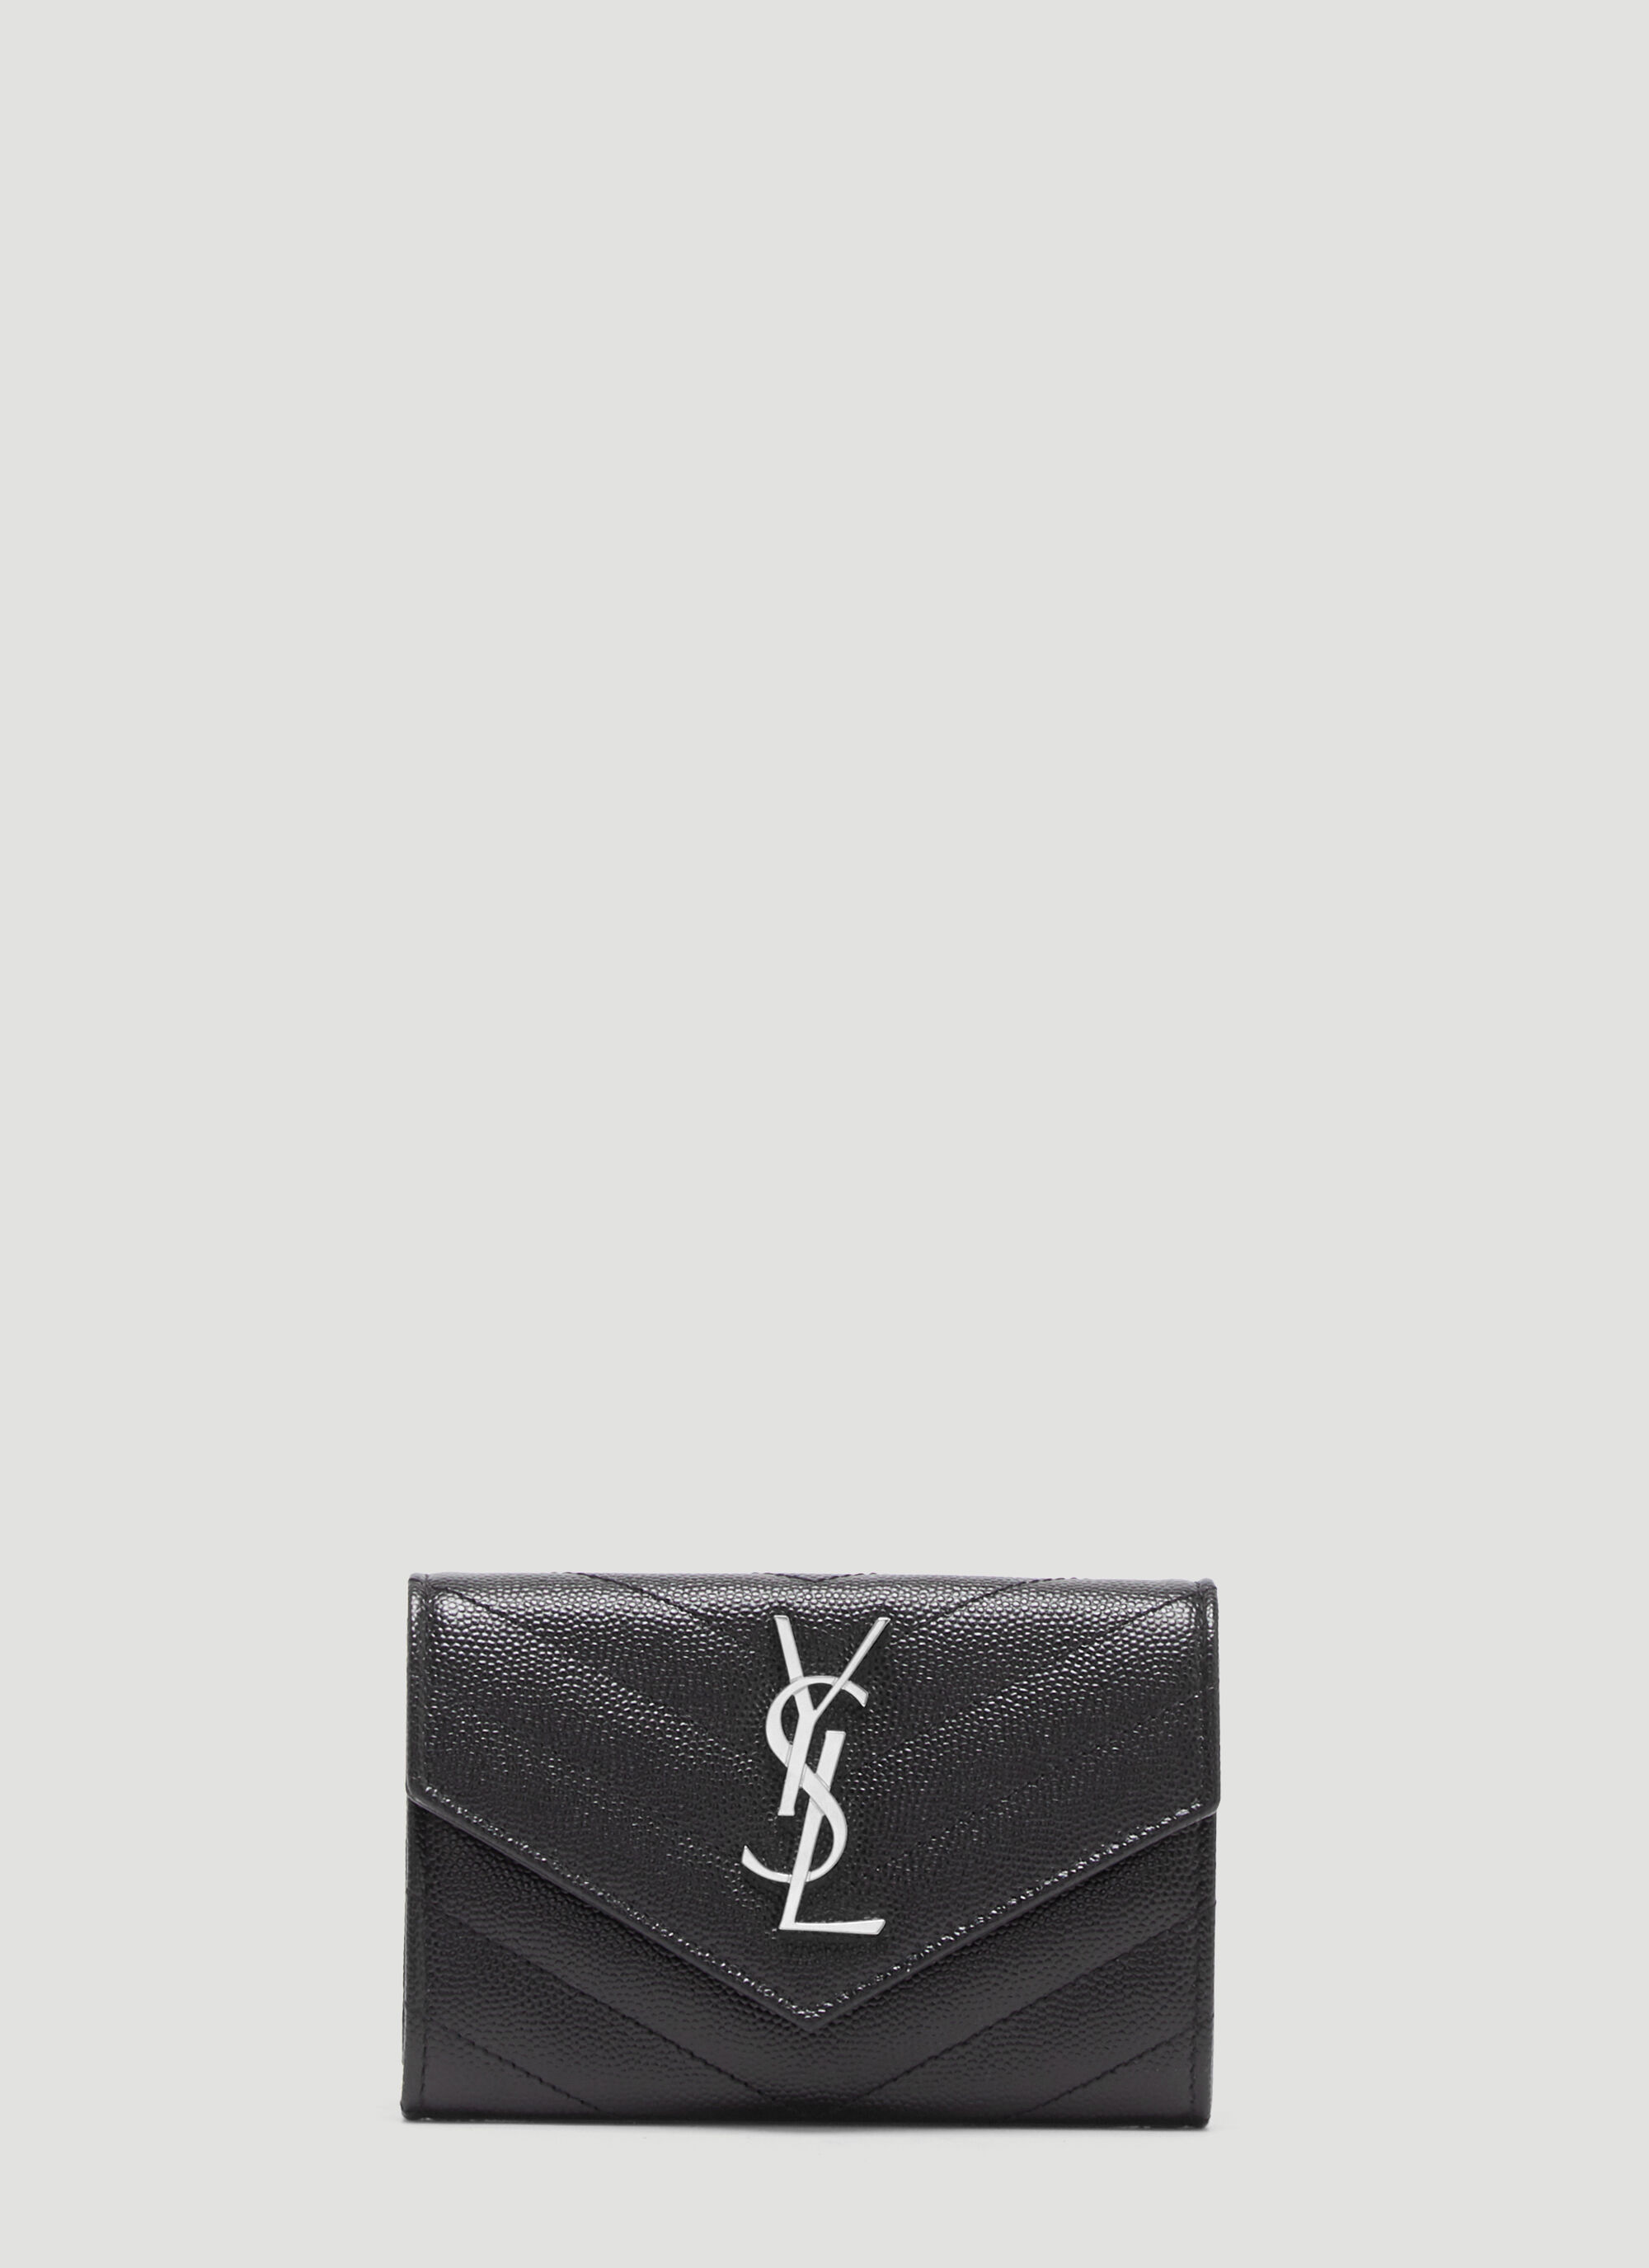 Gucci Envelope Wallet Black guc0227007